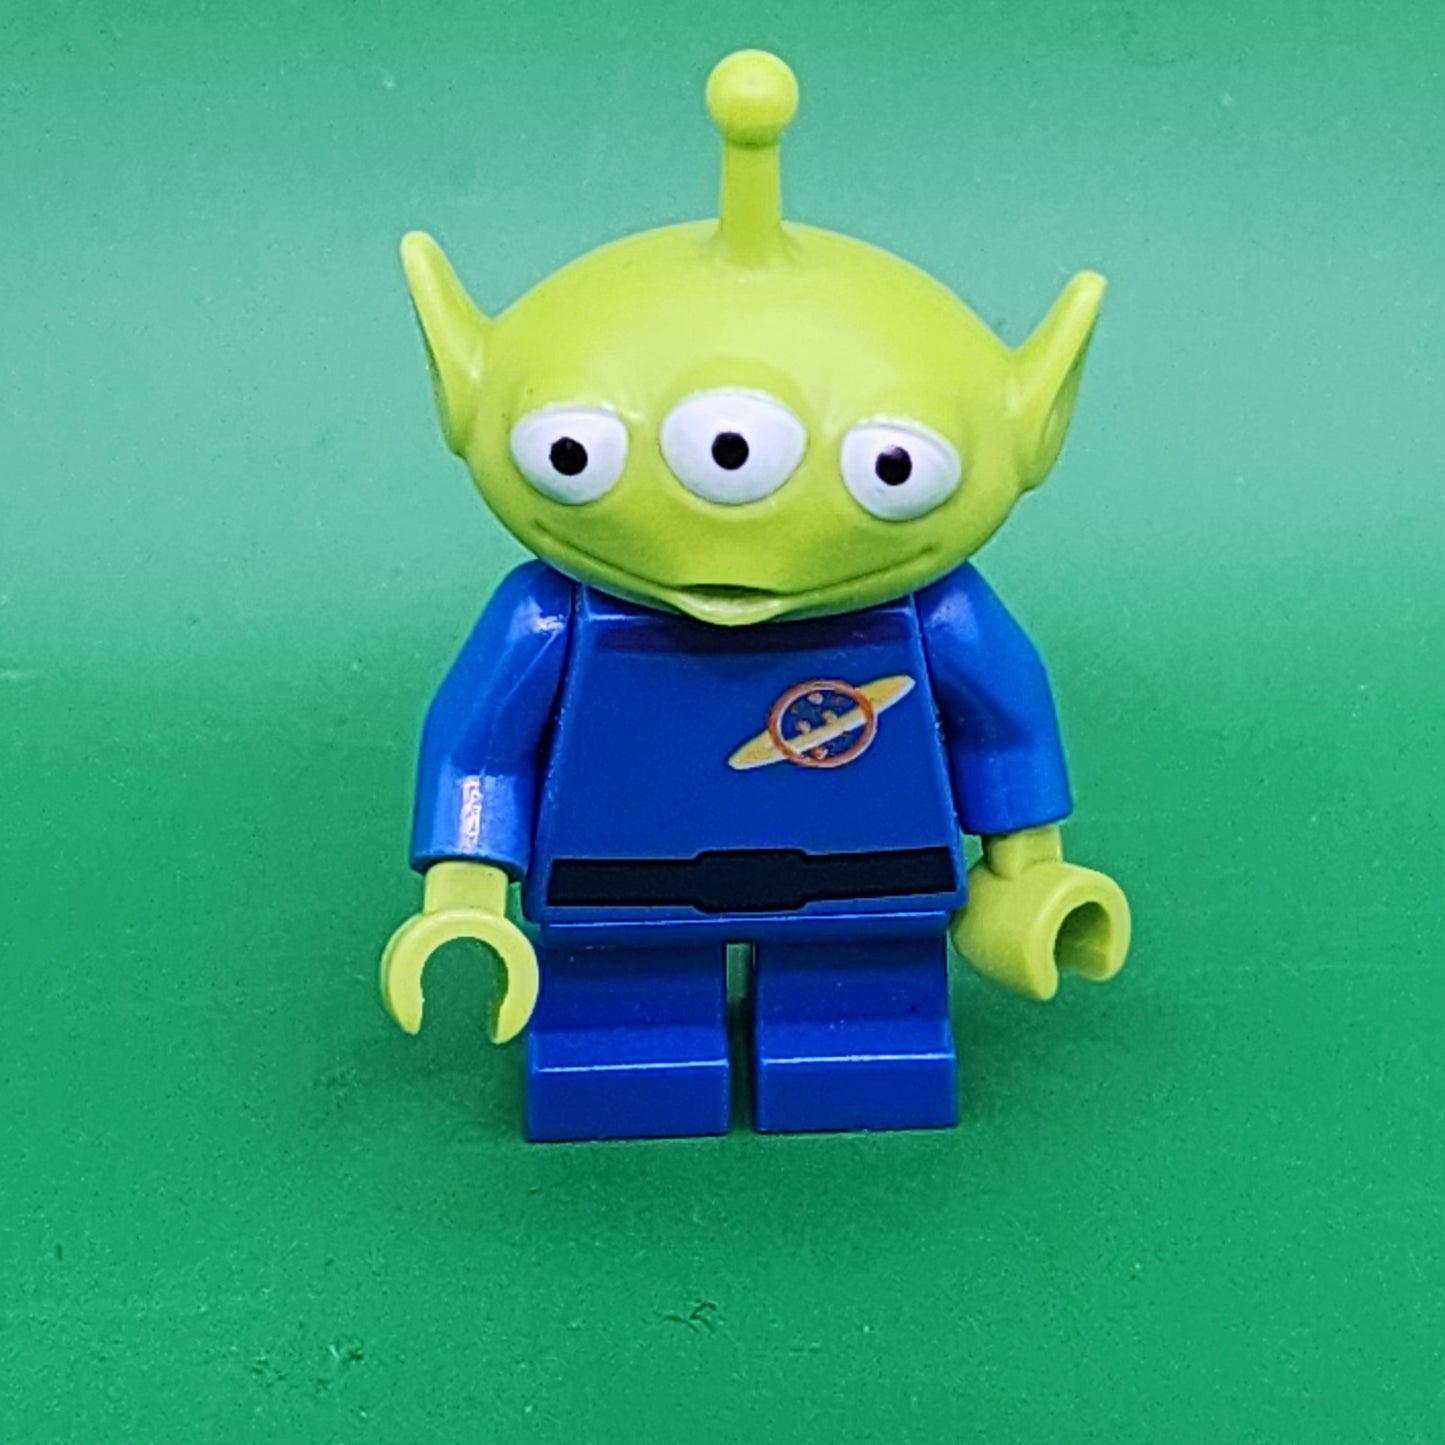 Lego Alien Minifigure toy006 Toy Story